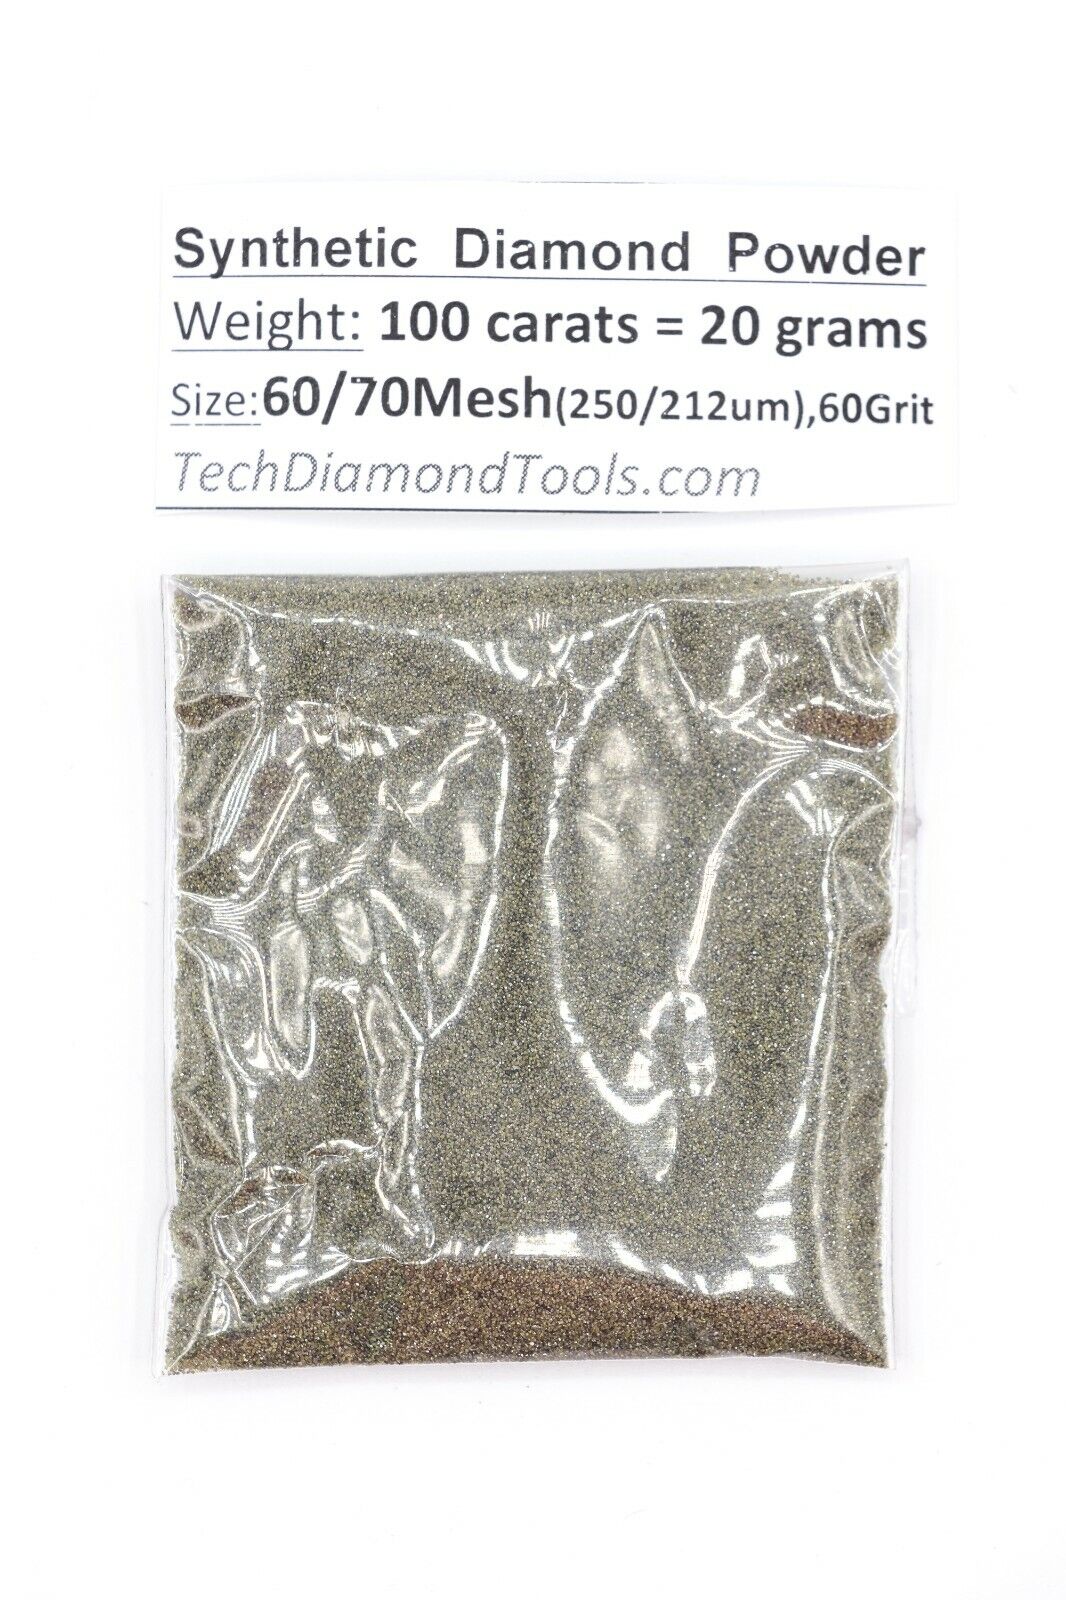 Diamond Powder 60/70 Mesh (250 / 212) 60 Grit, Weight = 100 Carat = 20 Gram